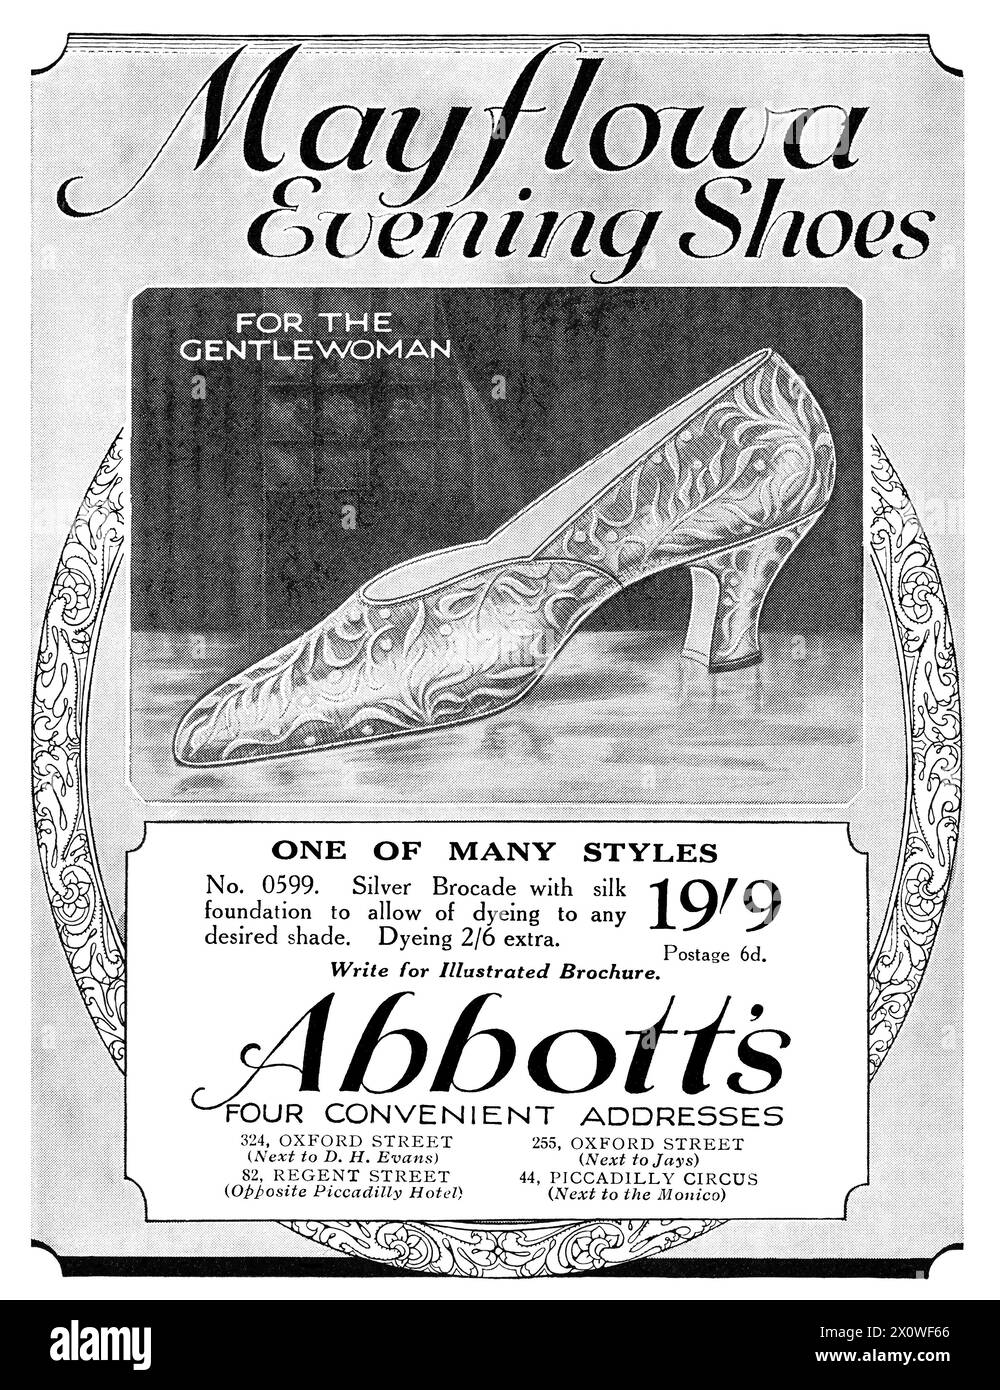 1928 British fashion advertisement for Mayflowa evening shoes by Abbotts. Stock Photo